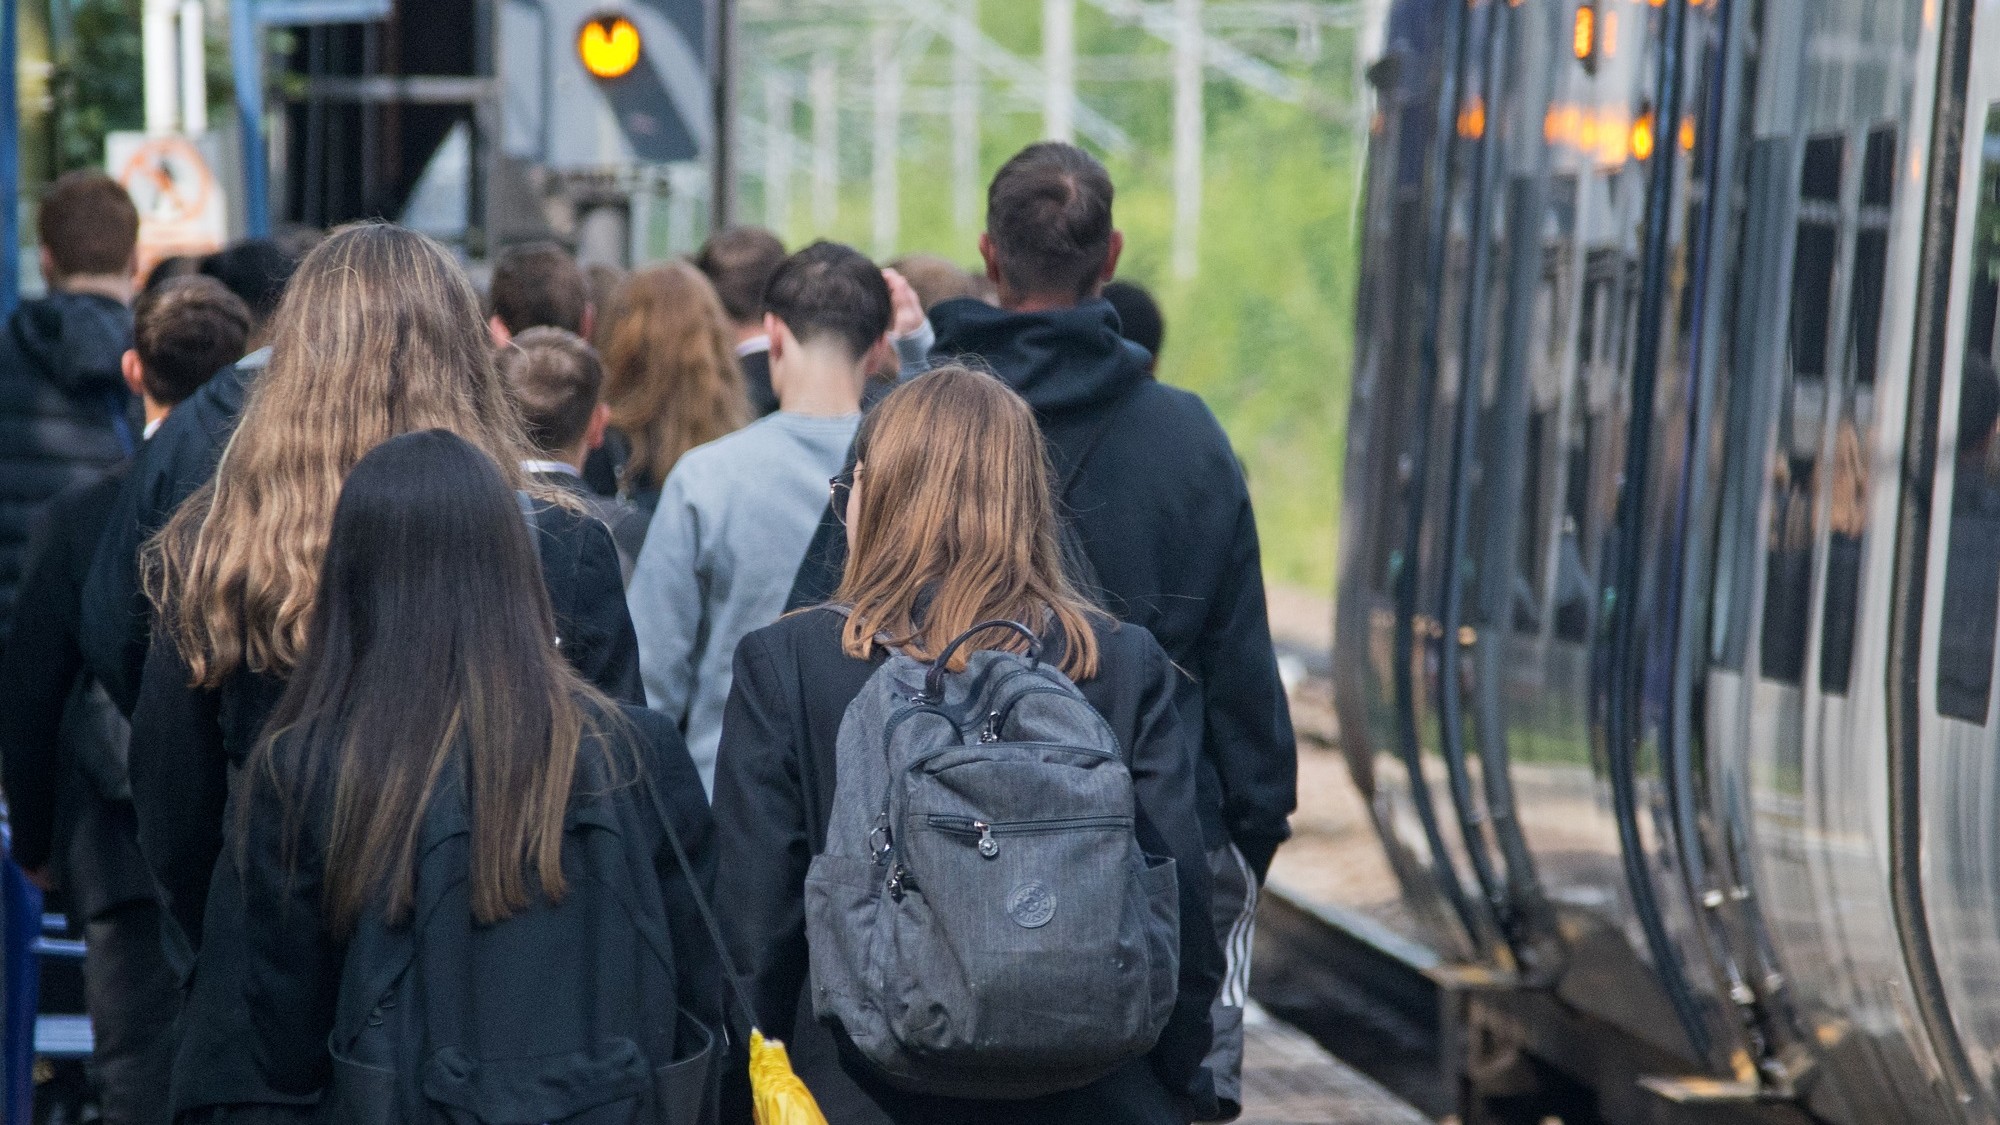 Image shows schoolchildren alongside a Northern train at a platform